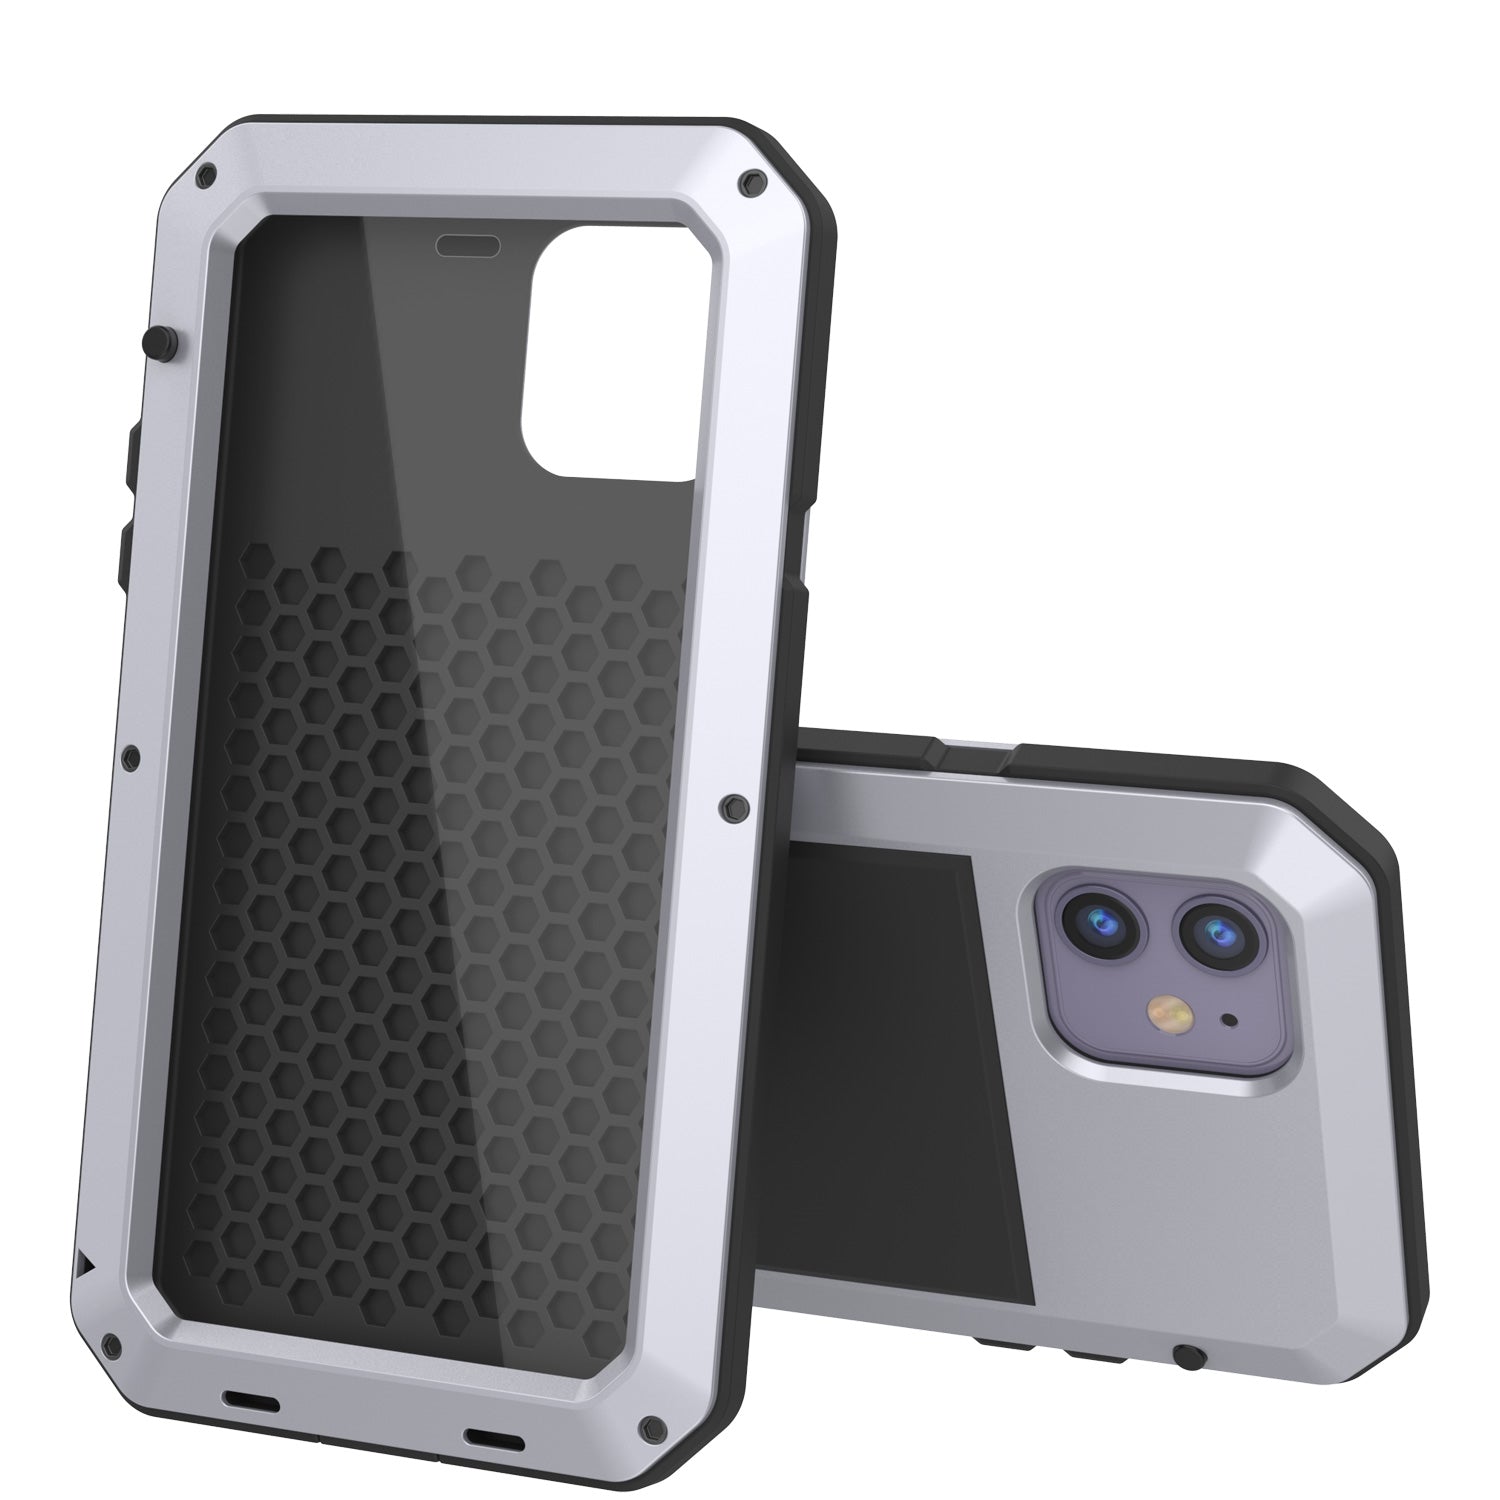 Punkcase iPhone 11 Pro Max Metal Case, Heavy Duty Military Grade Armor Cover [Shock Proof] Full Body Hard [Black] - Black